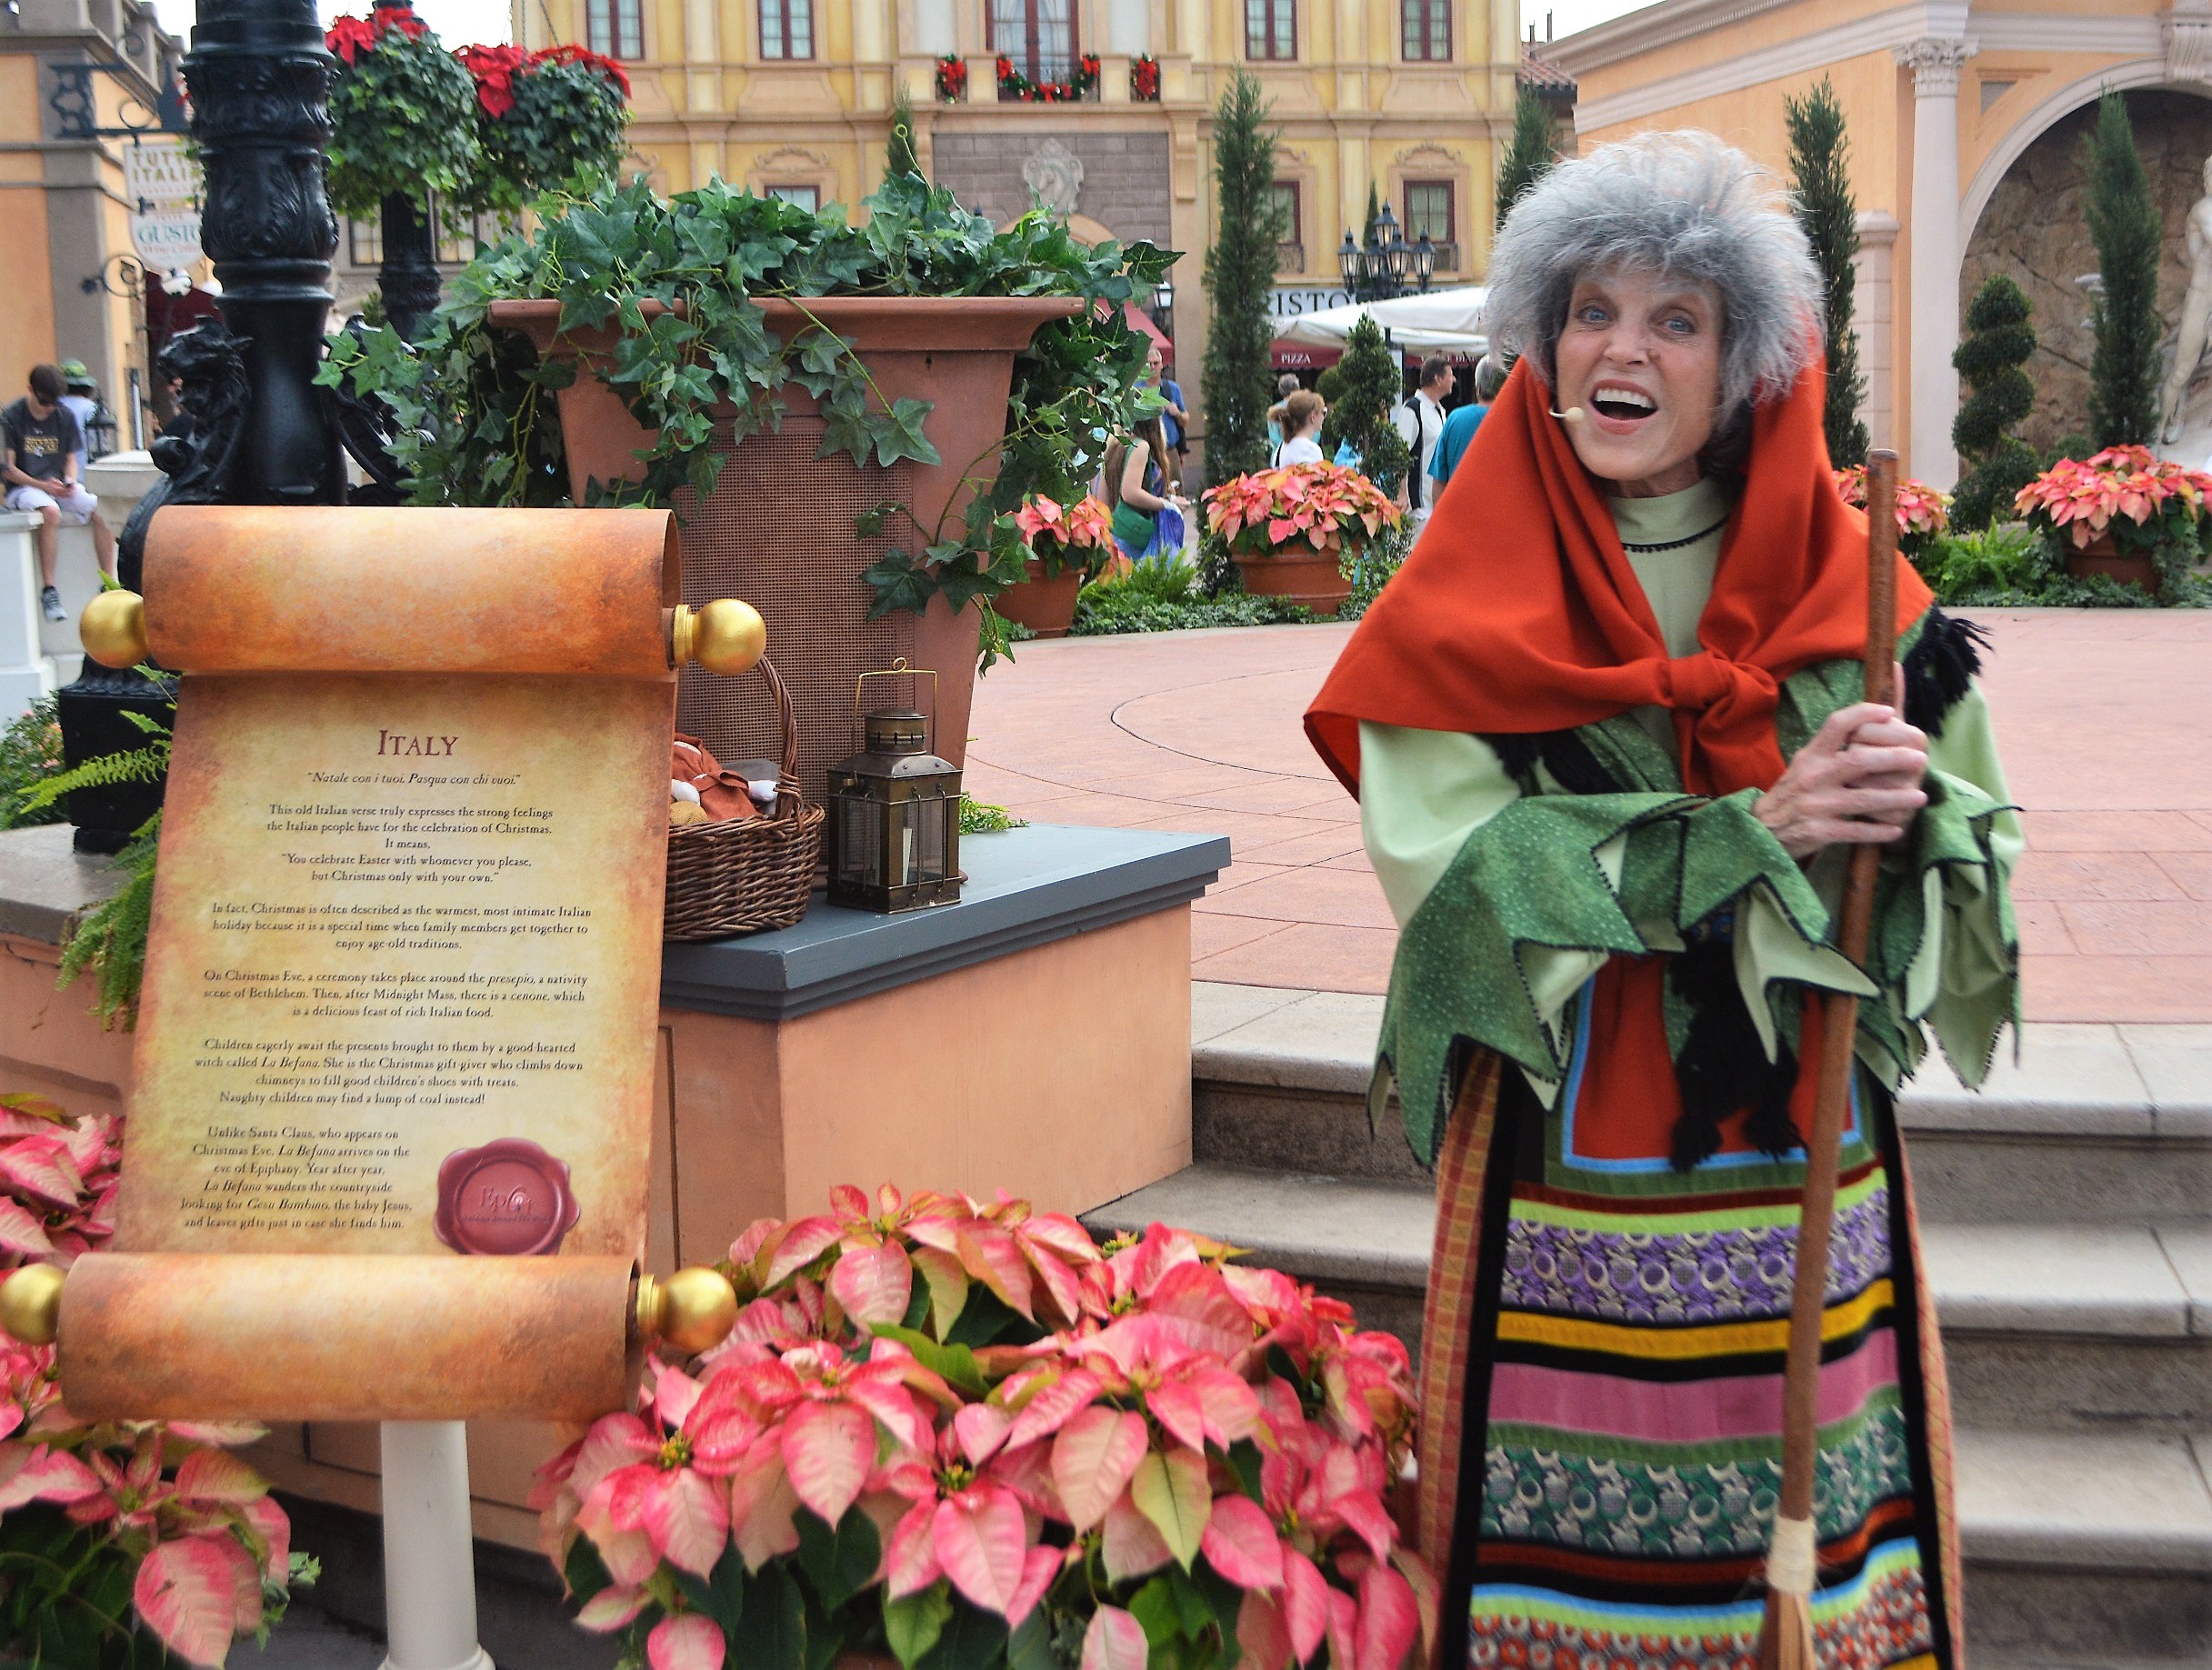 Epcot Holidays Around the World | Italy | La Befana and the Story of Epiphany Eve Walt Disney World